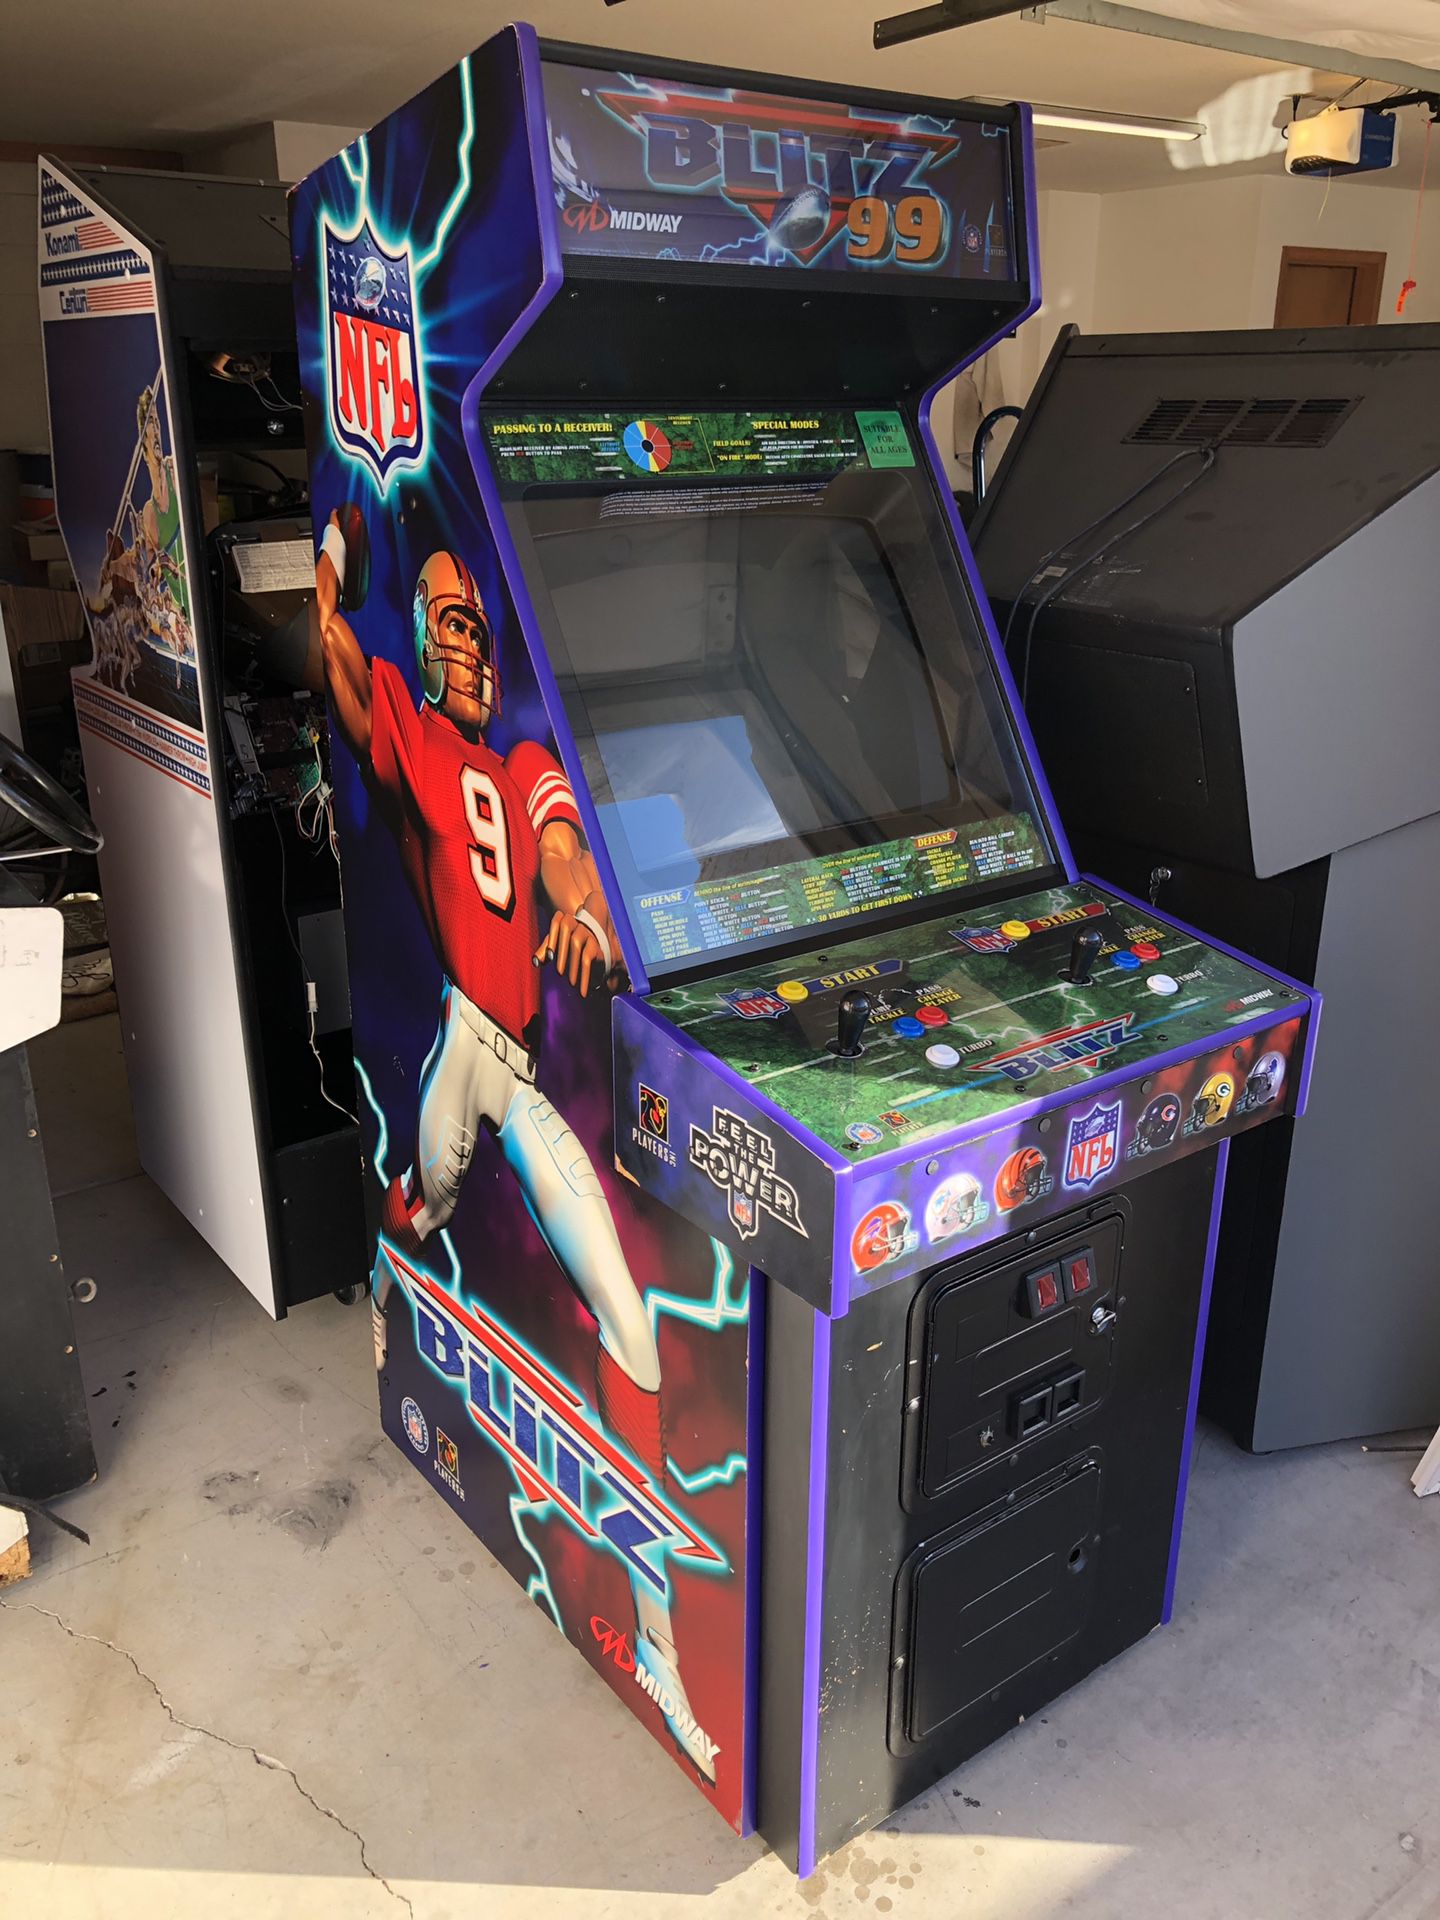 NFL Blitz ‘99 Arcade Machine - Excellent Condition